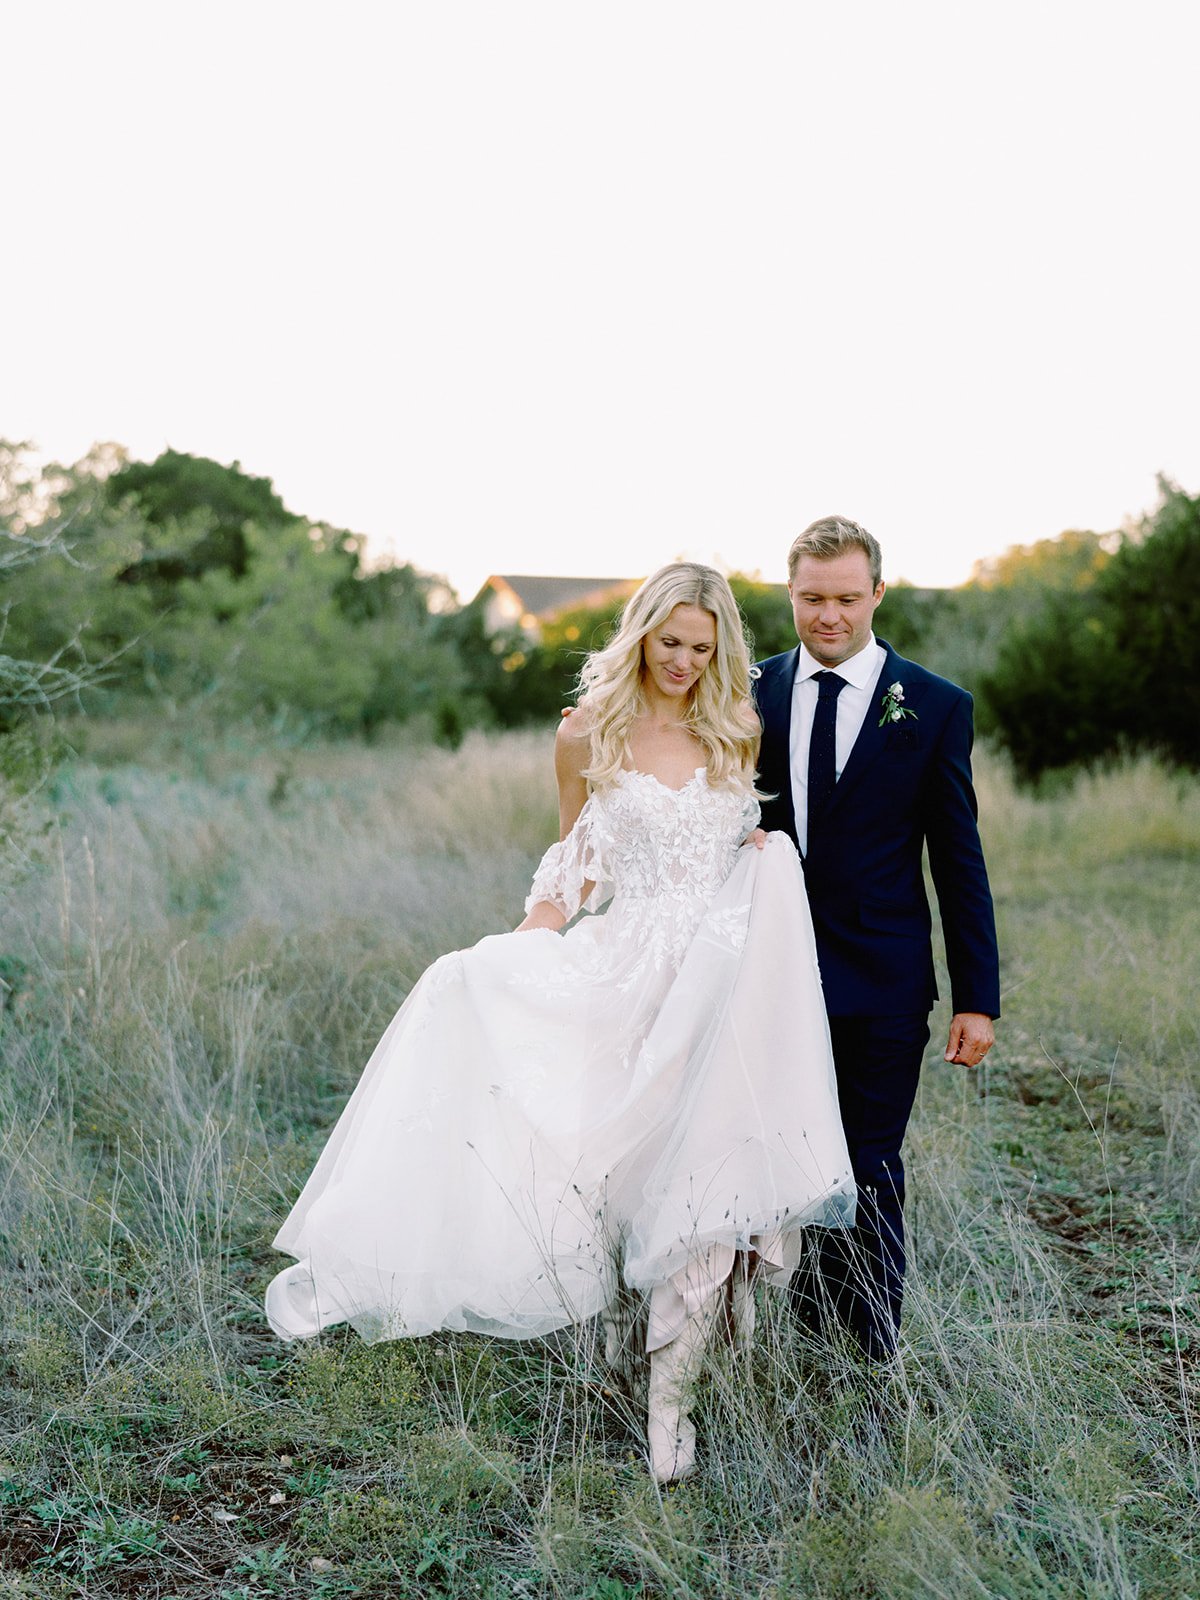 Best-Austin-Wedding-Photographers-Elopement-Film-35mm-Asheville-Santa-Barbara-Backyard-122.jpg